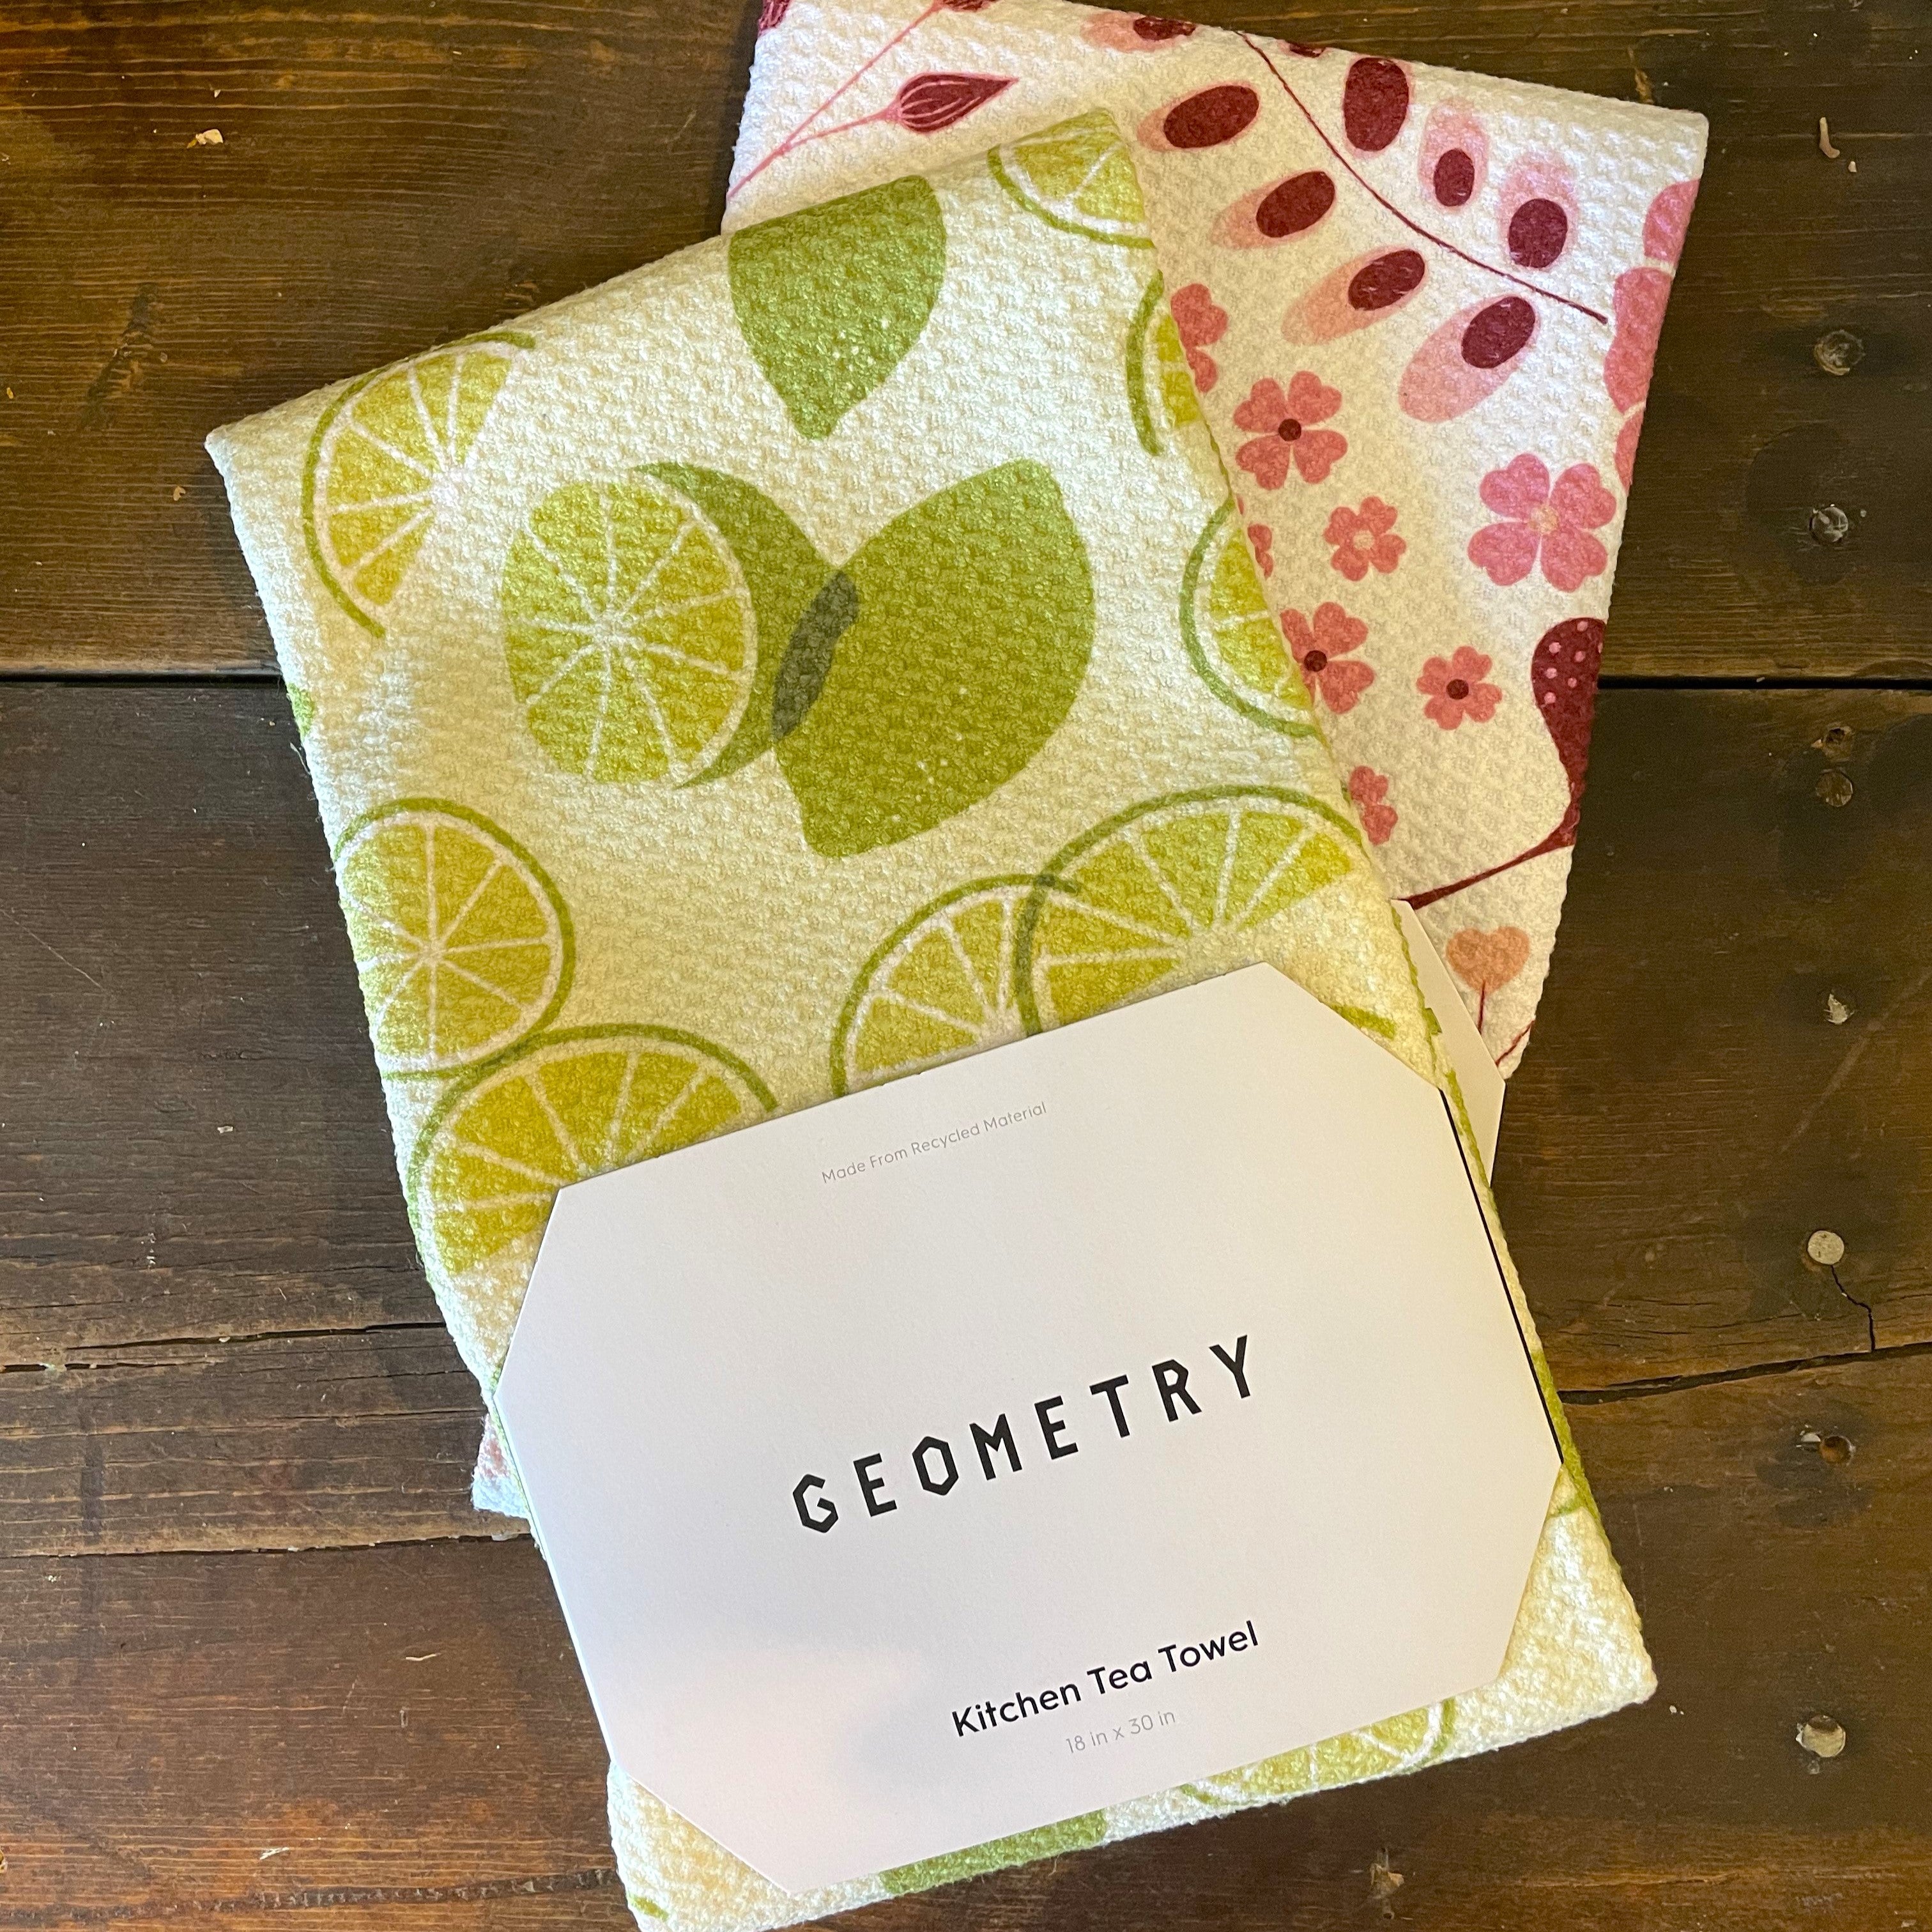 Geometry House - Every Level Kitchen Tea Towel